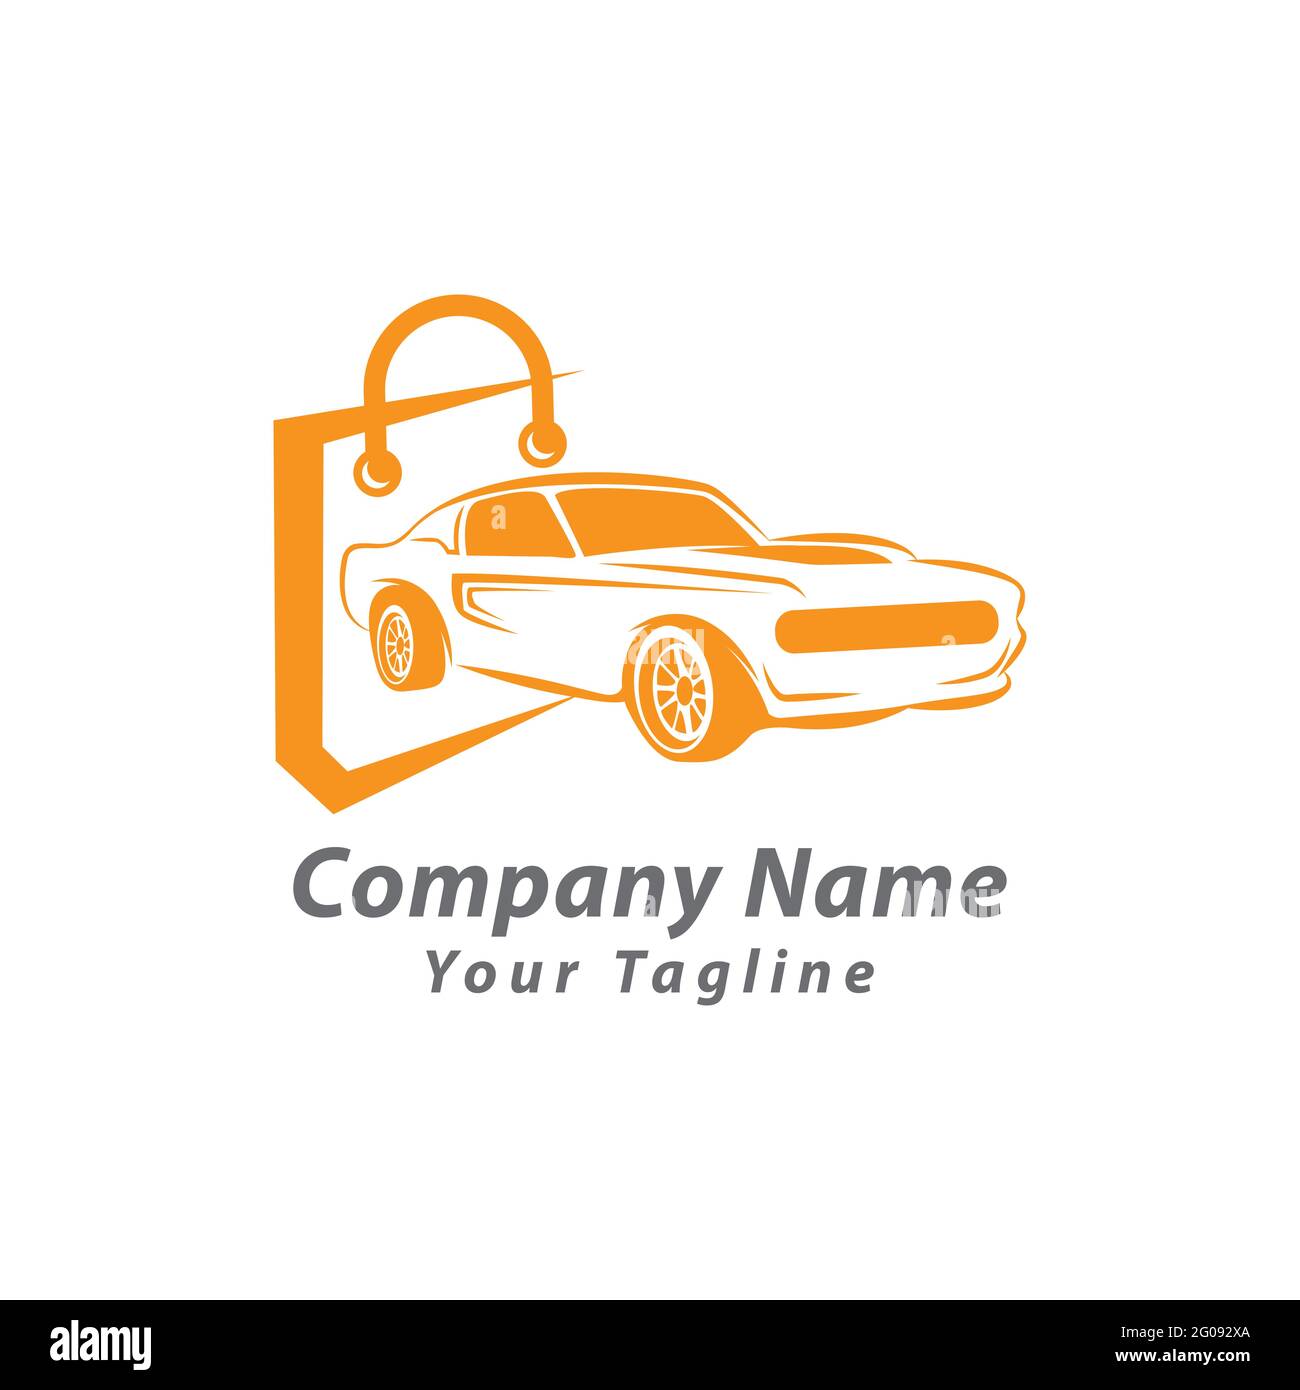 Auto Car Shop und Shopping Logo Design Element.EPS 10 Stock Vektor